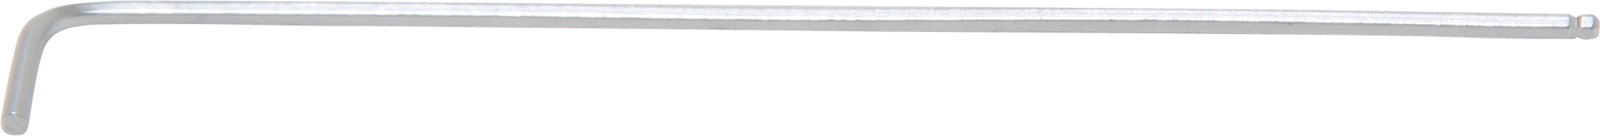 Winkelschlüssel | extra lang | Innensechskant/Innensechskant mit Kugelkopf 1,5 mm - BGS 790-1.5